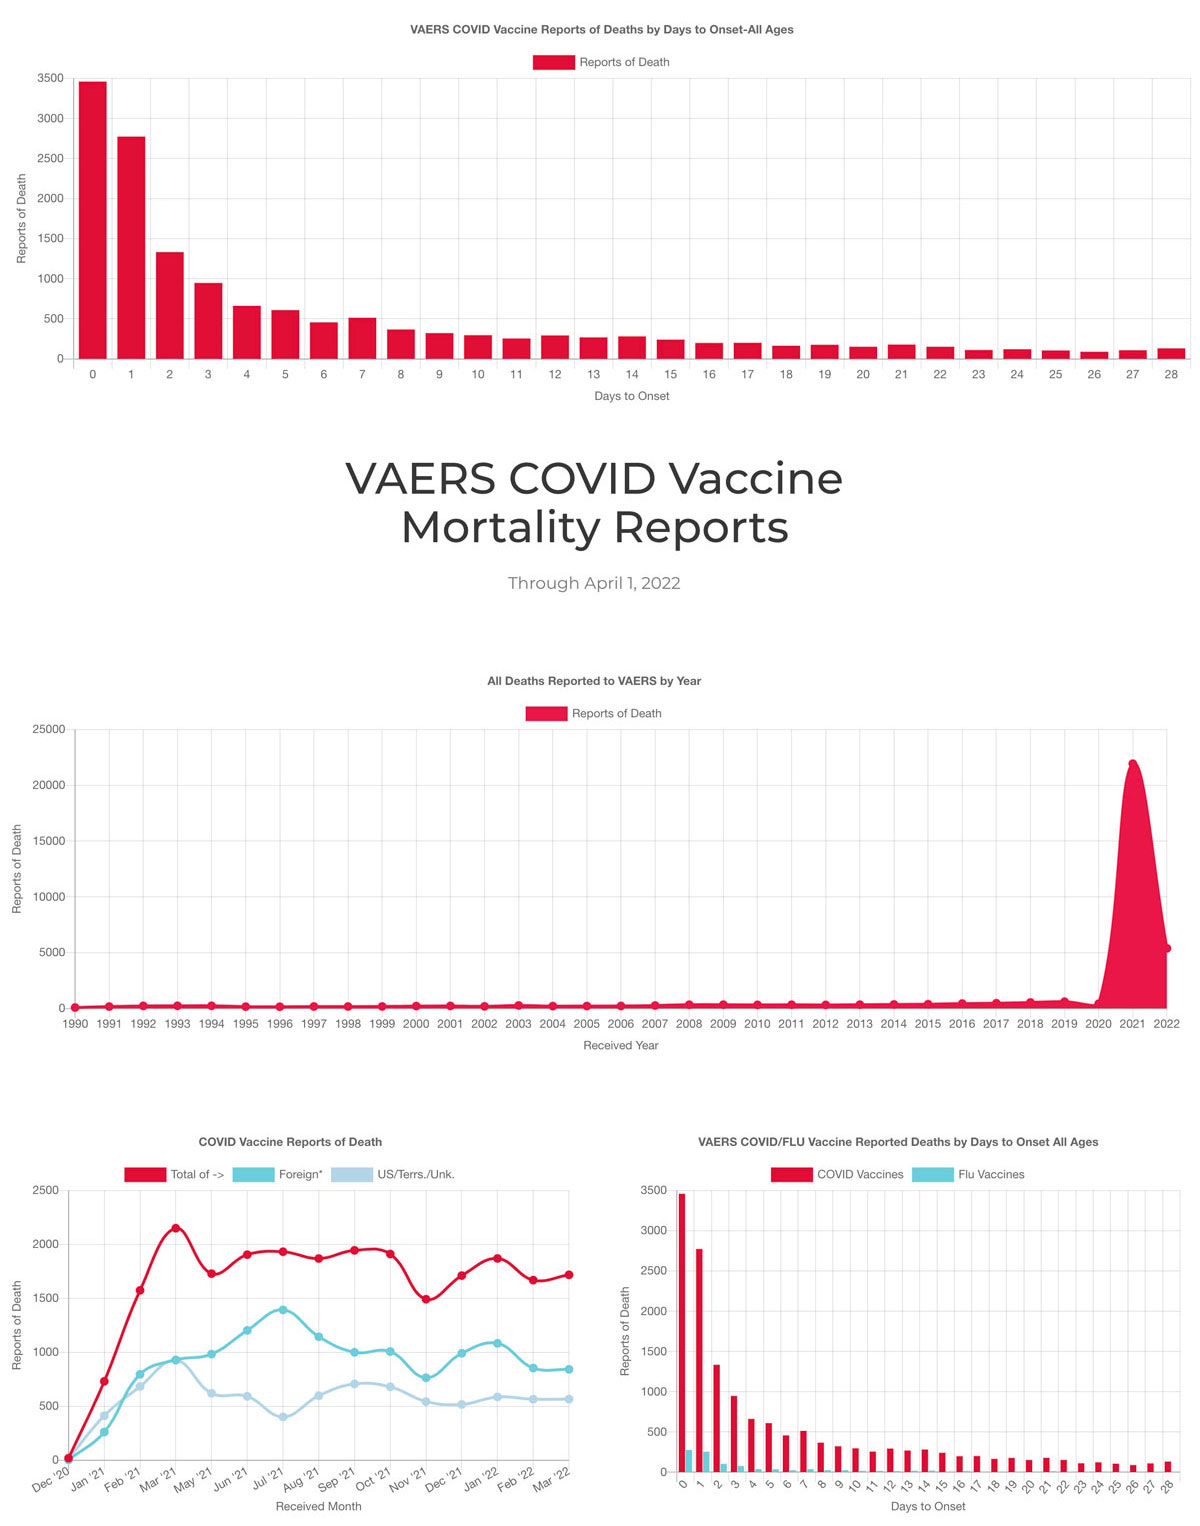 VAERS Mortality Data Through April 1, 2022